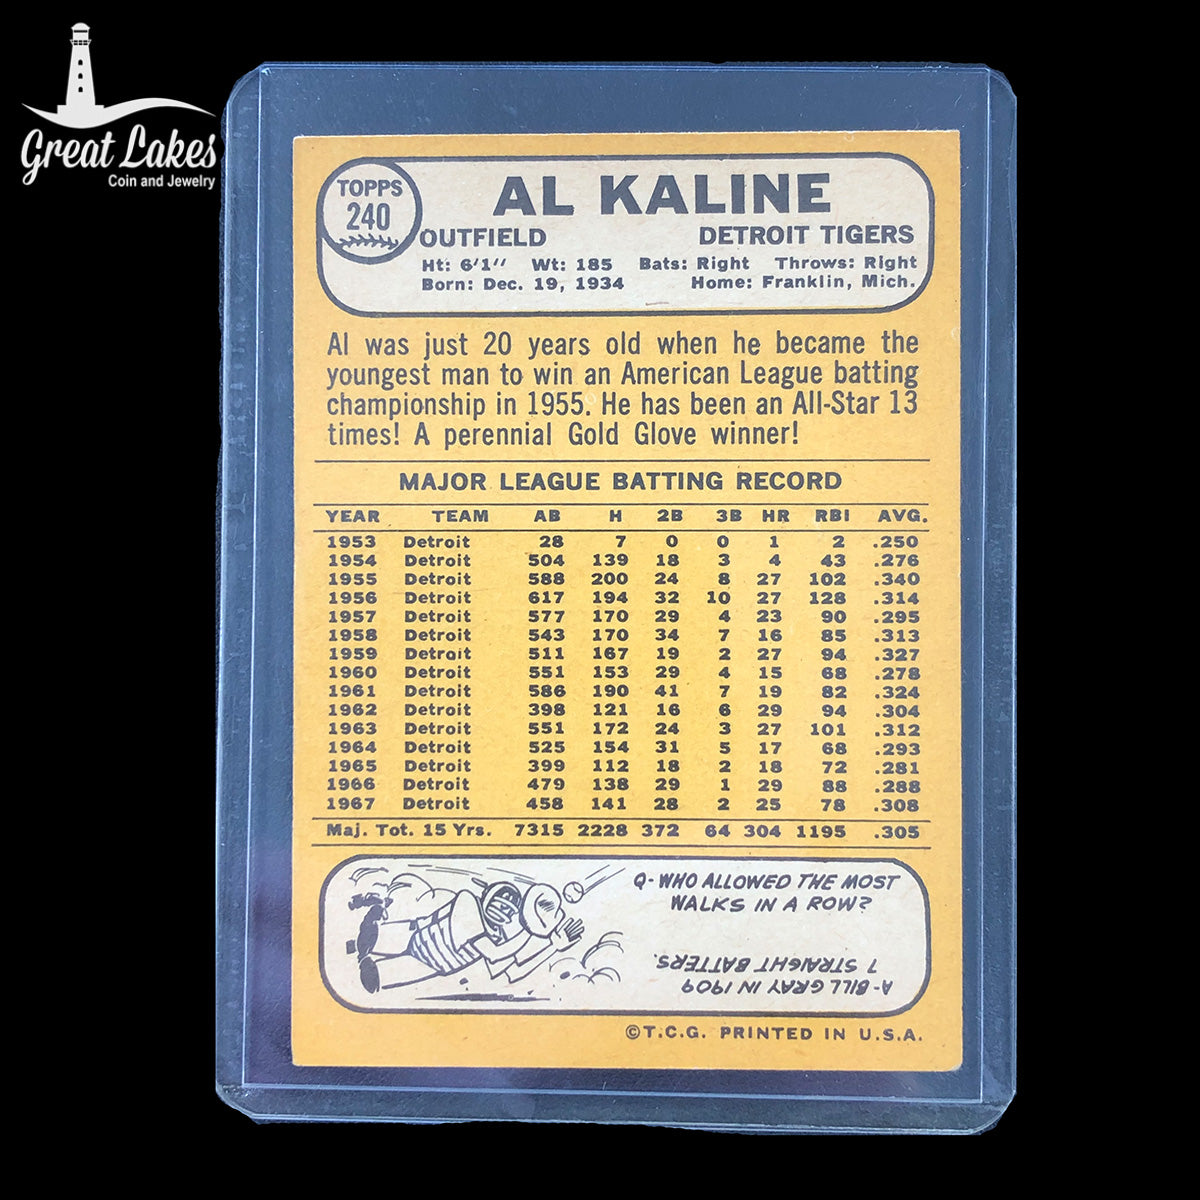 1968 Topps Al Kaline Card #240